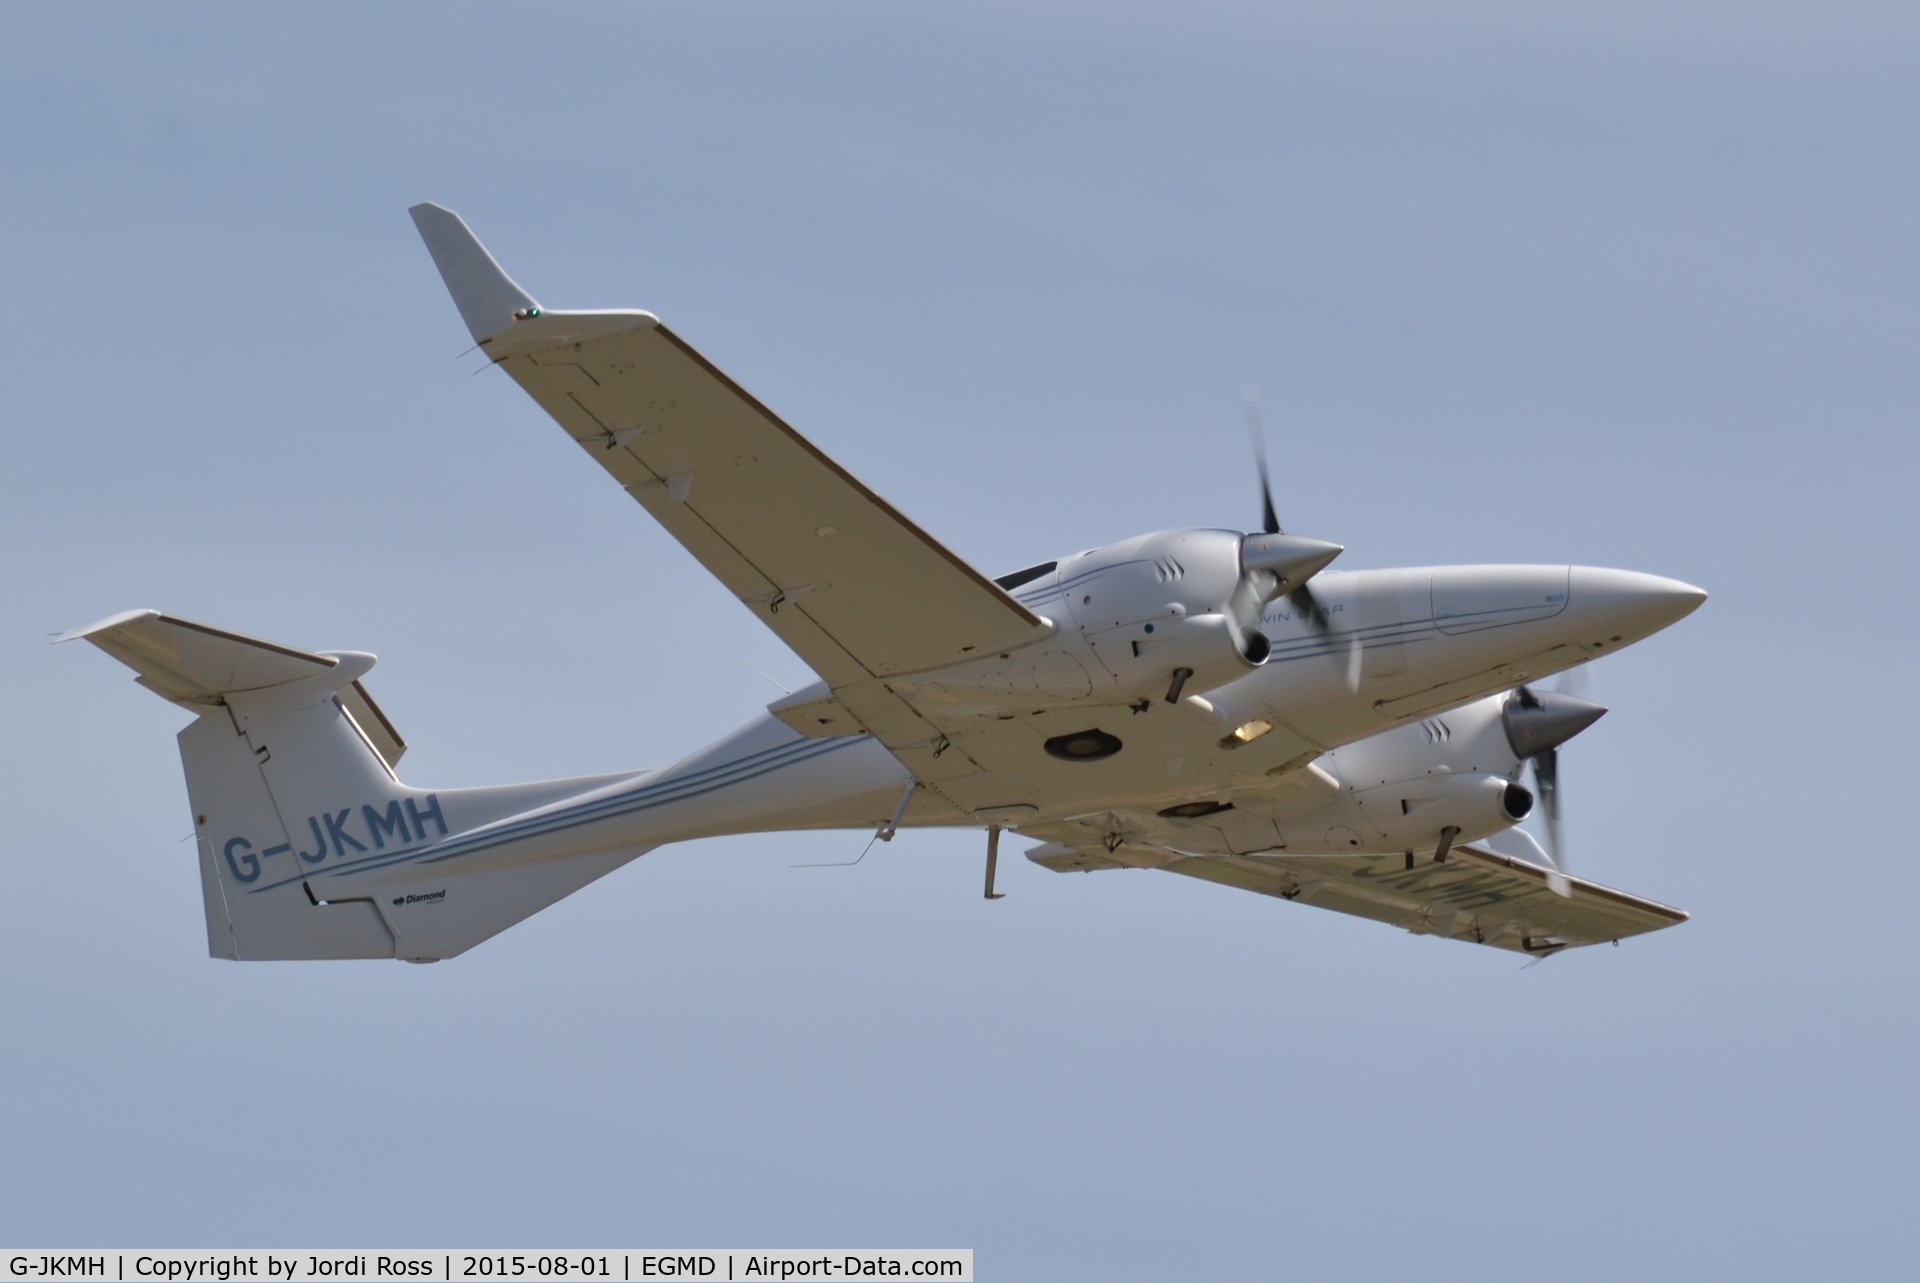 G-JKMH, 2006 Diamond DA-42 Twin Star C/N 42.168, Training flight at Lydd. Shoreham based